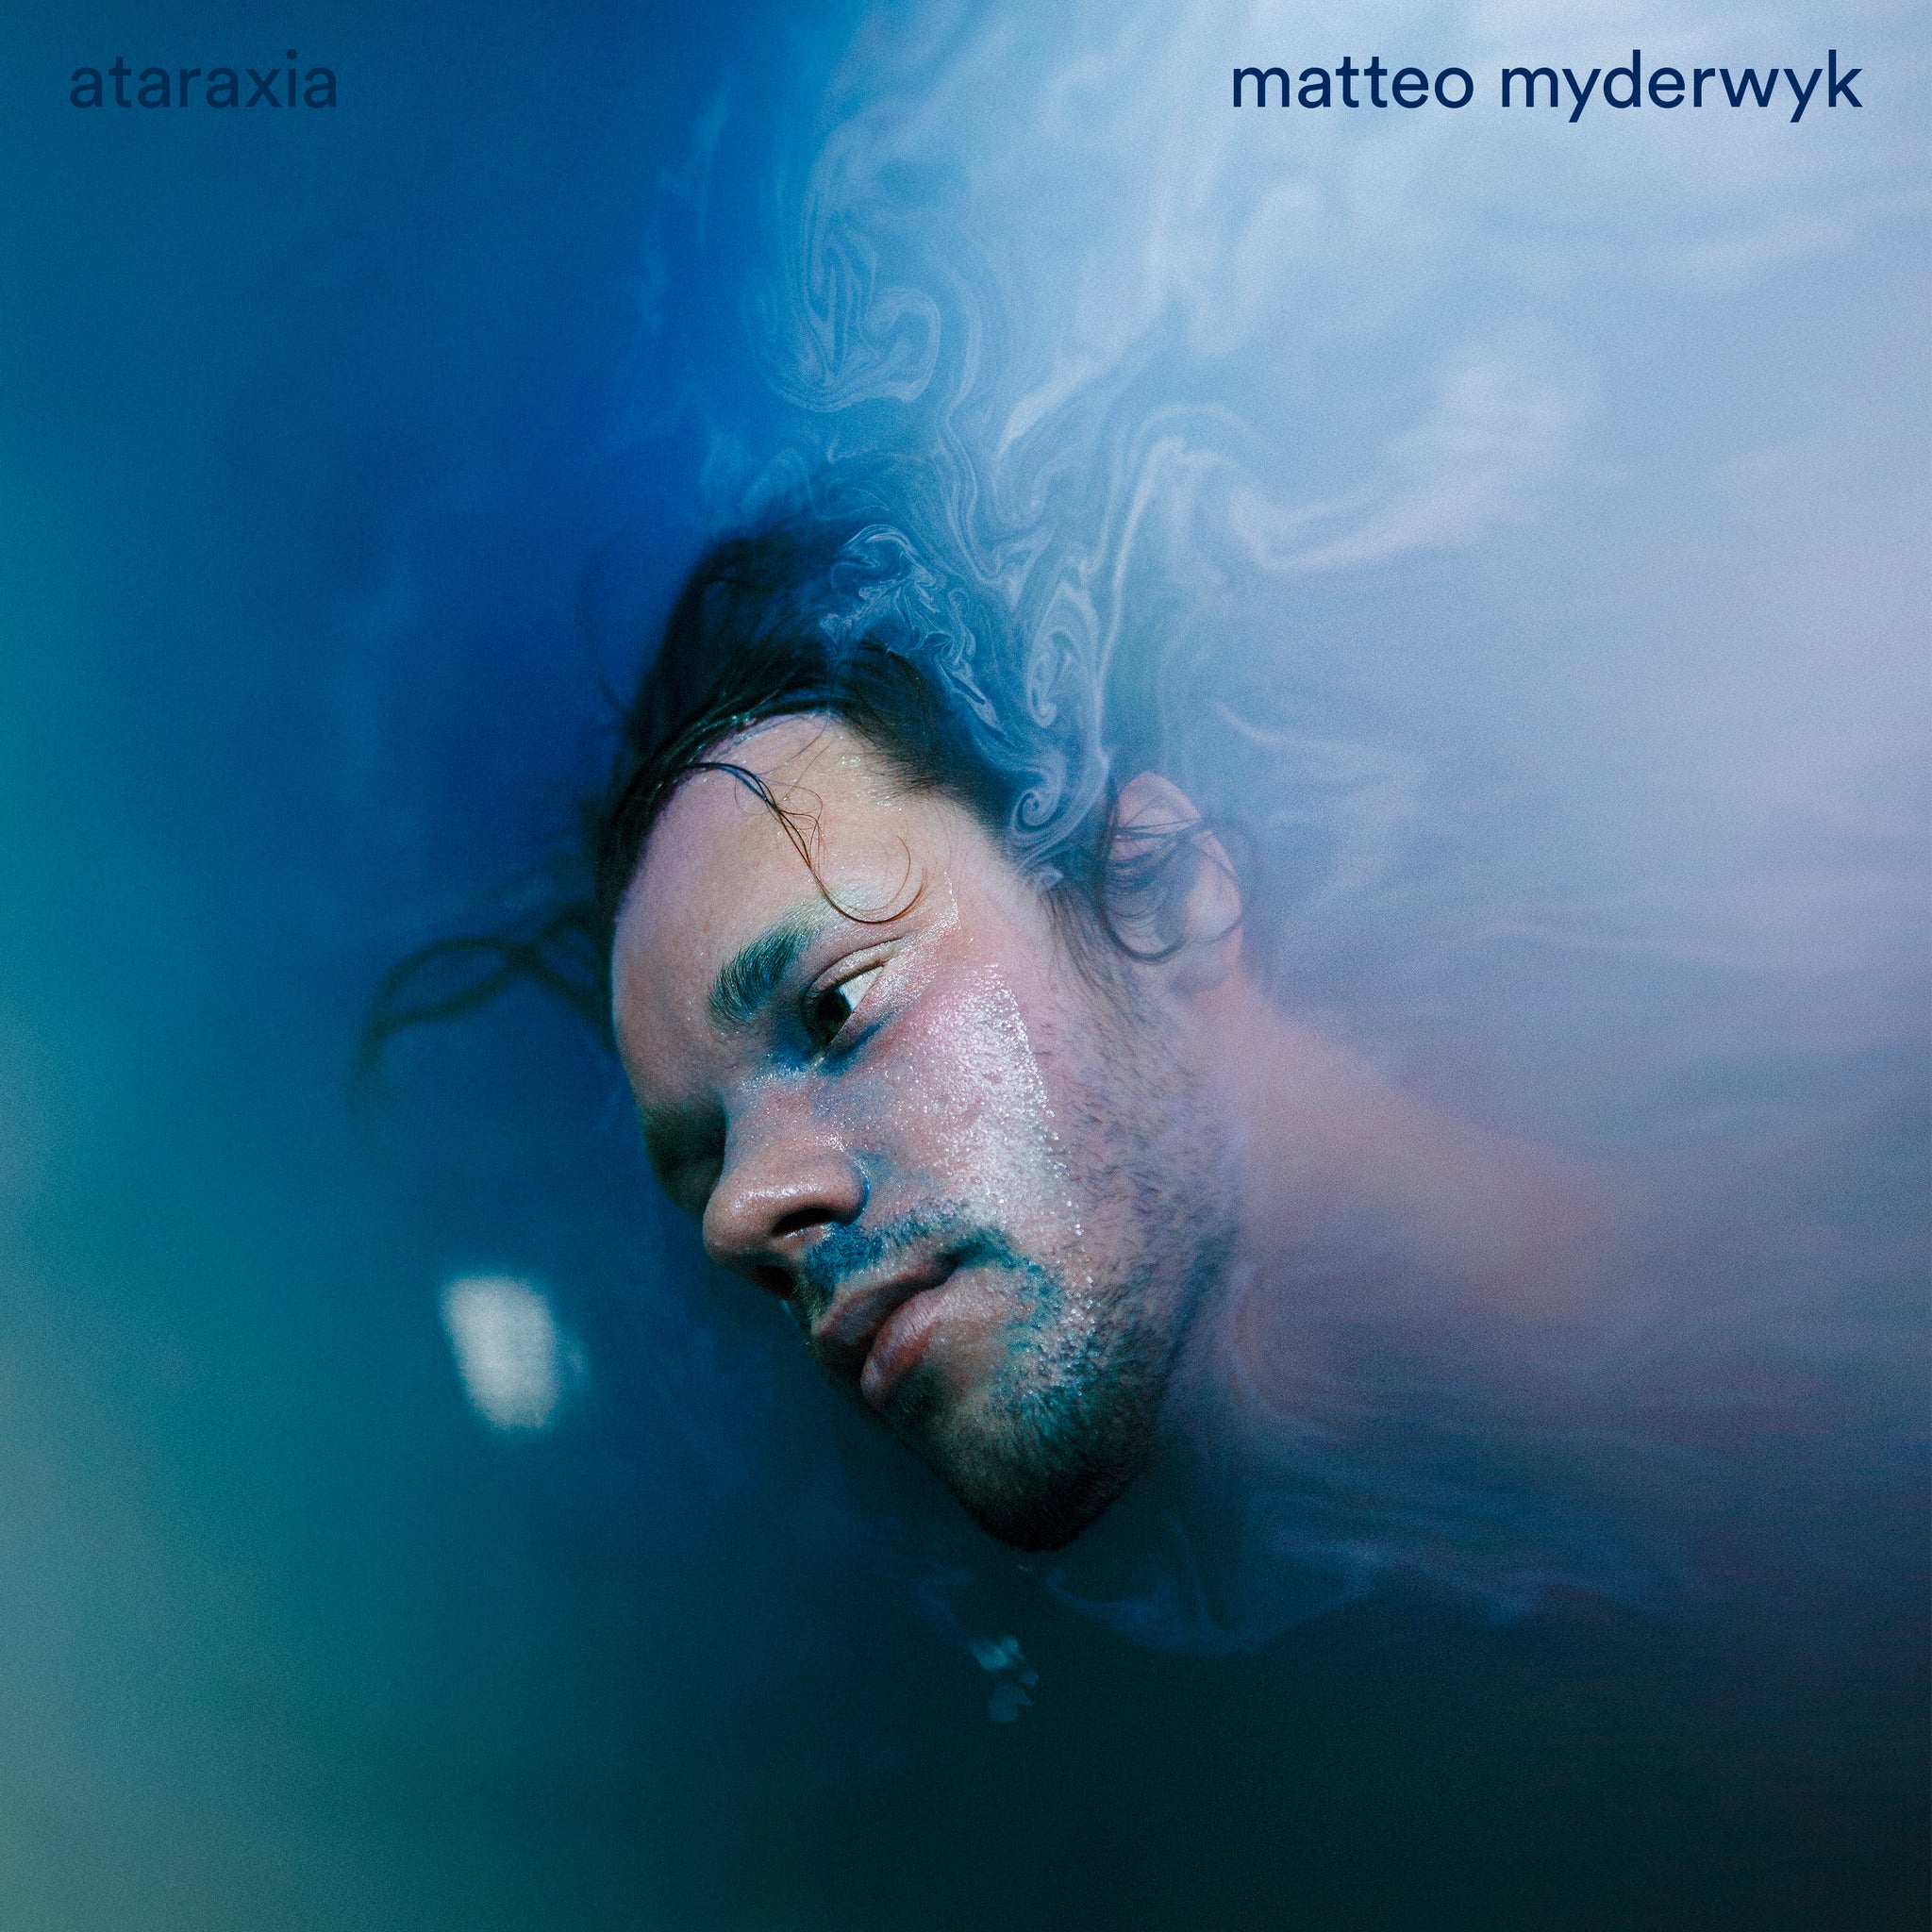 Matteo Myderwyk - Ataraxia